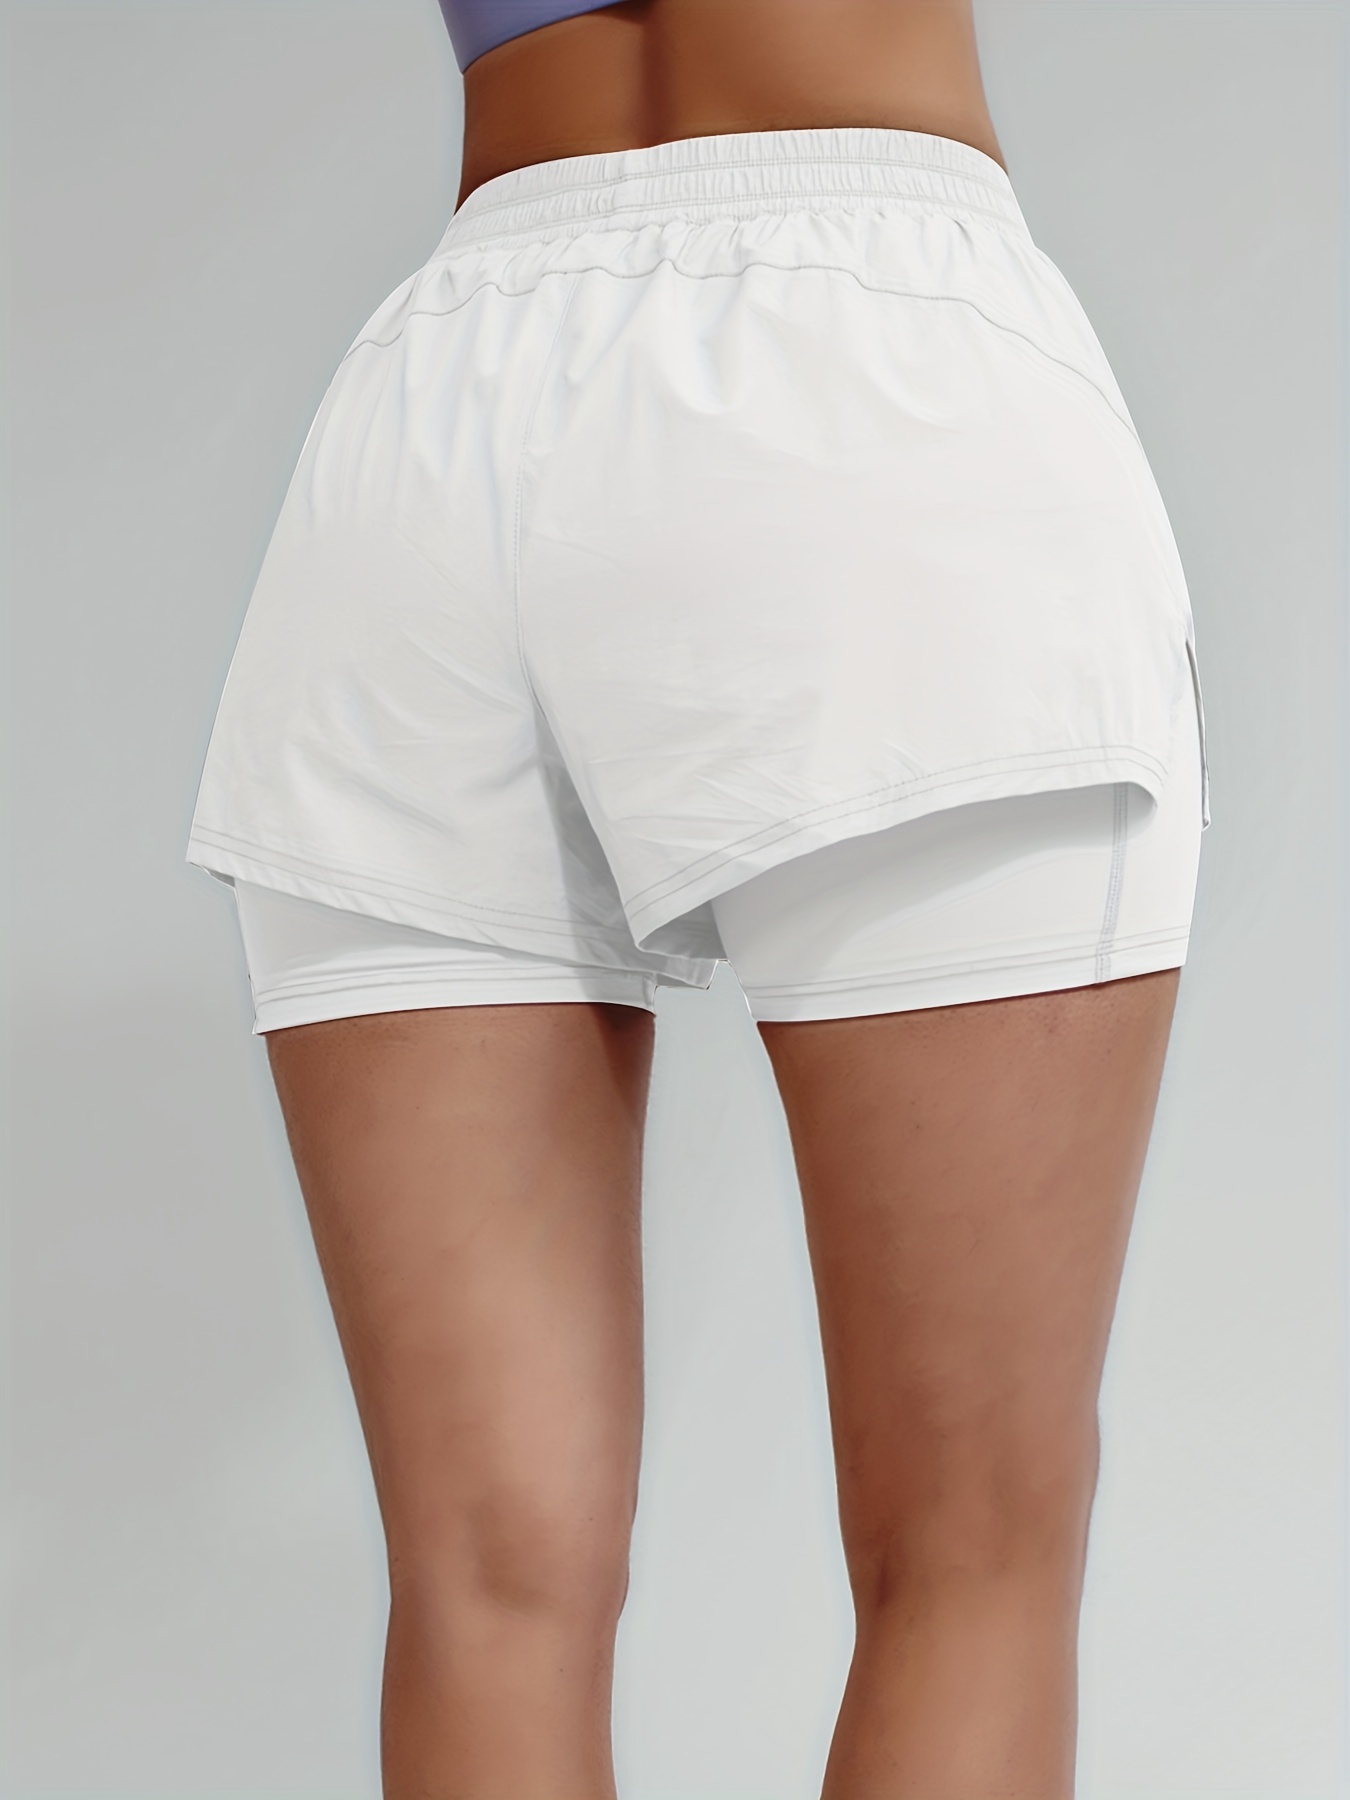 Pantalones cortos deportivos para mujer, Shorts deportivos